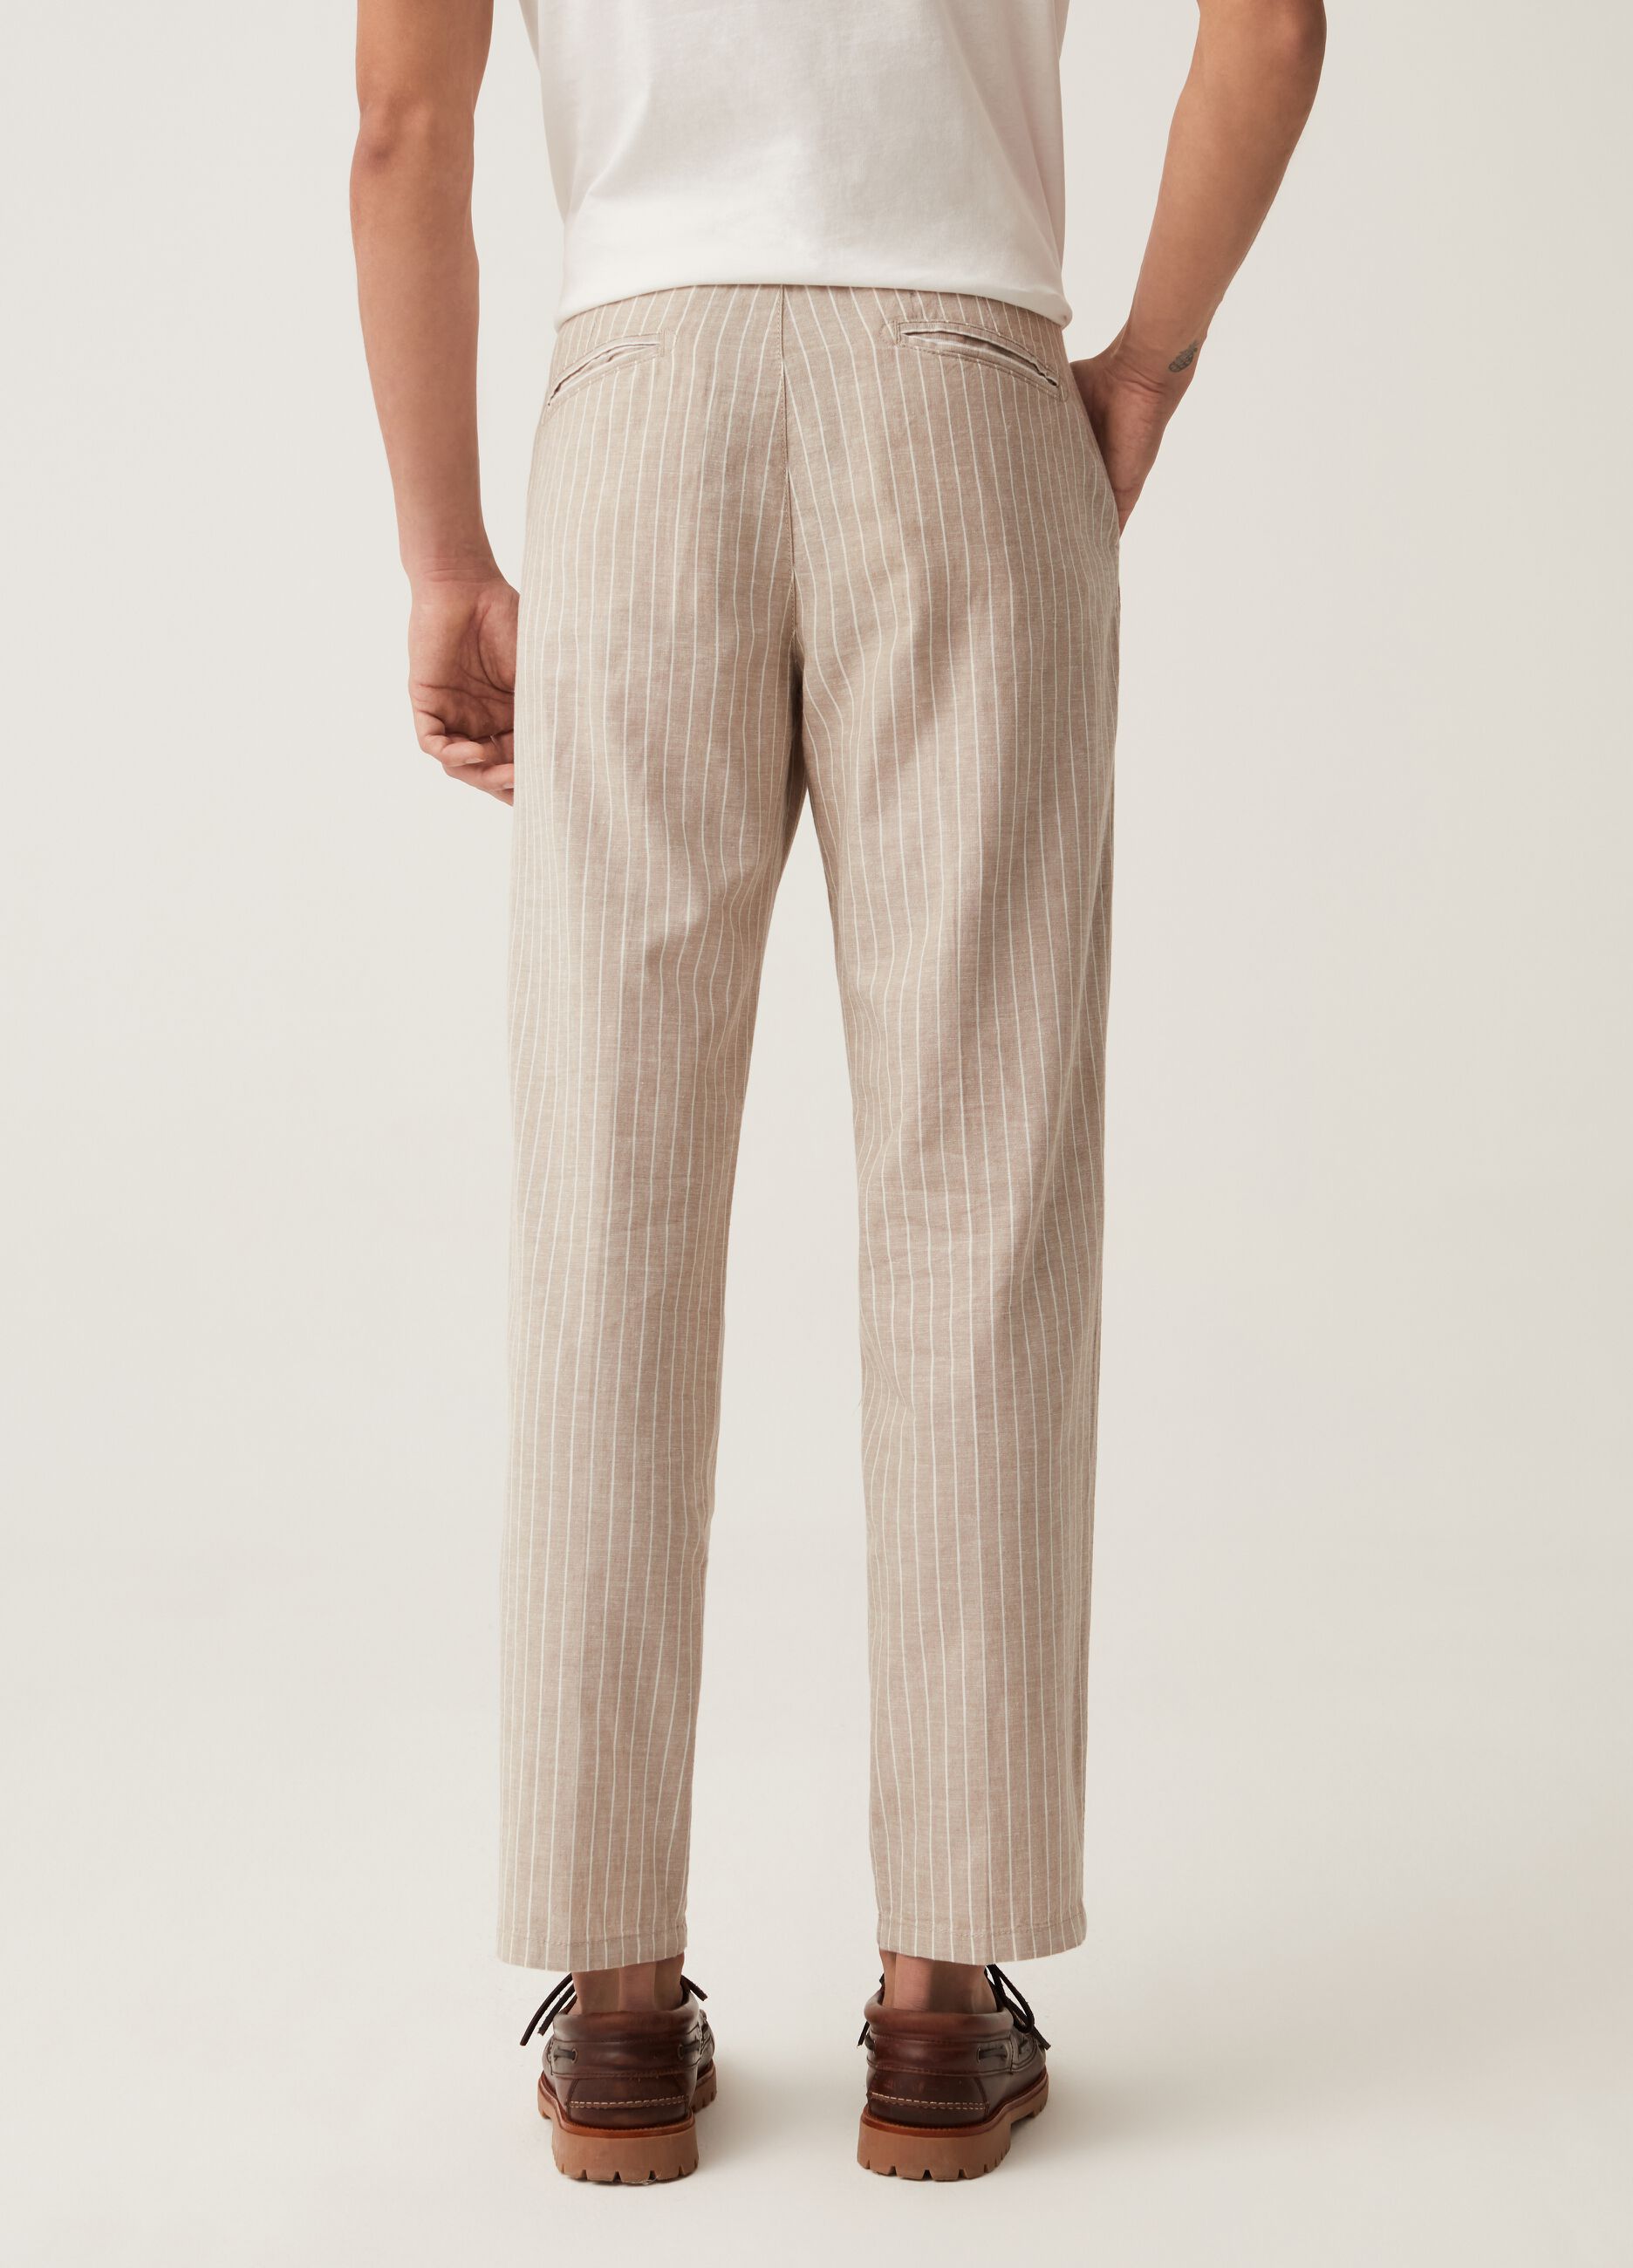 Pantaloni chino in cotone chambray a righe